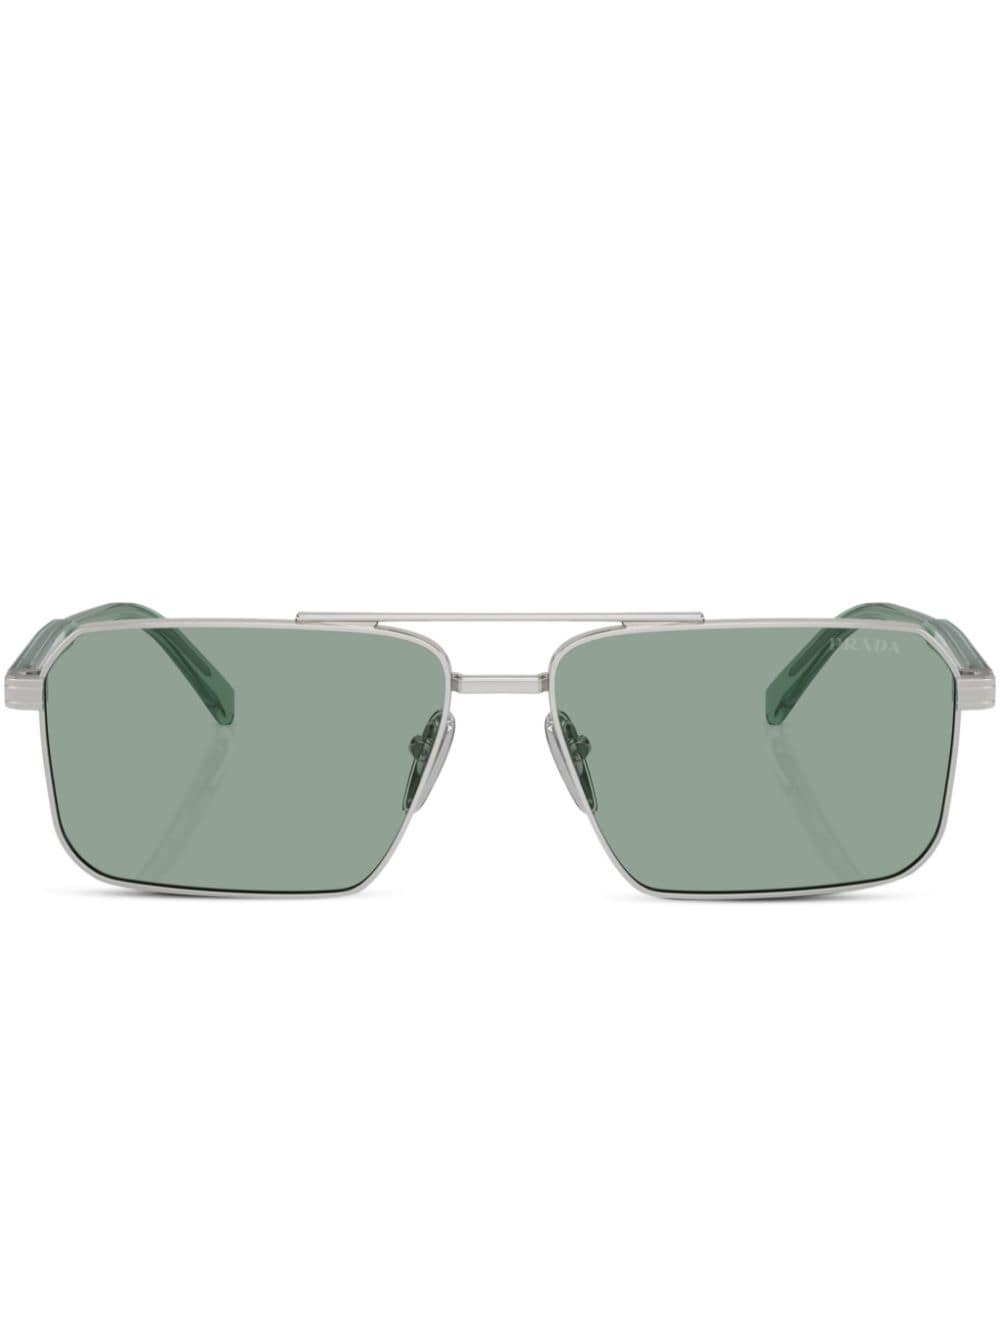 Prada Eyewear Prada PR A57S aviator frame sunglasses - Silver von Prada Eyewear